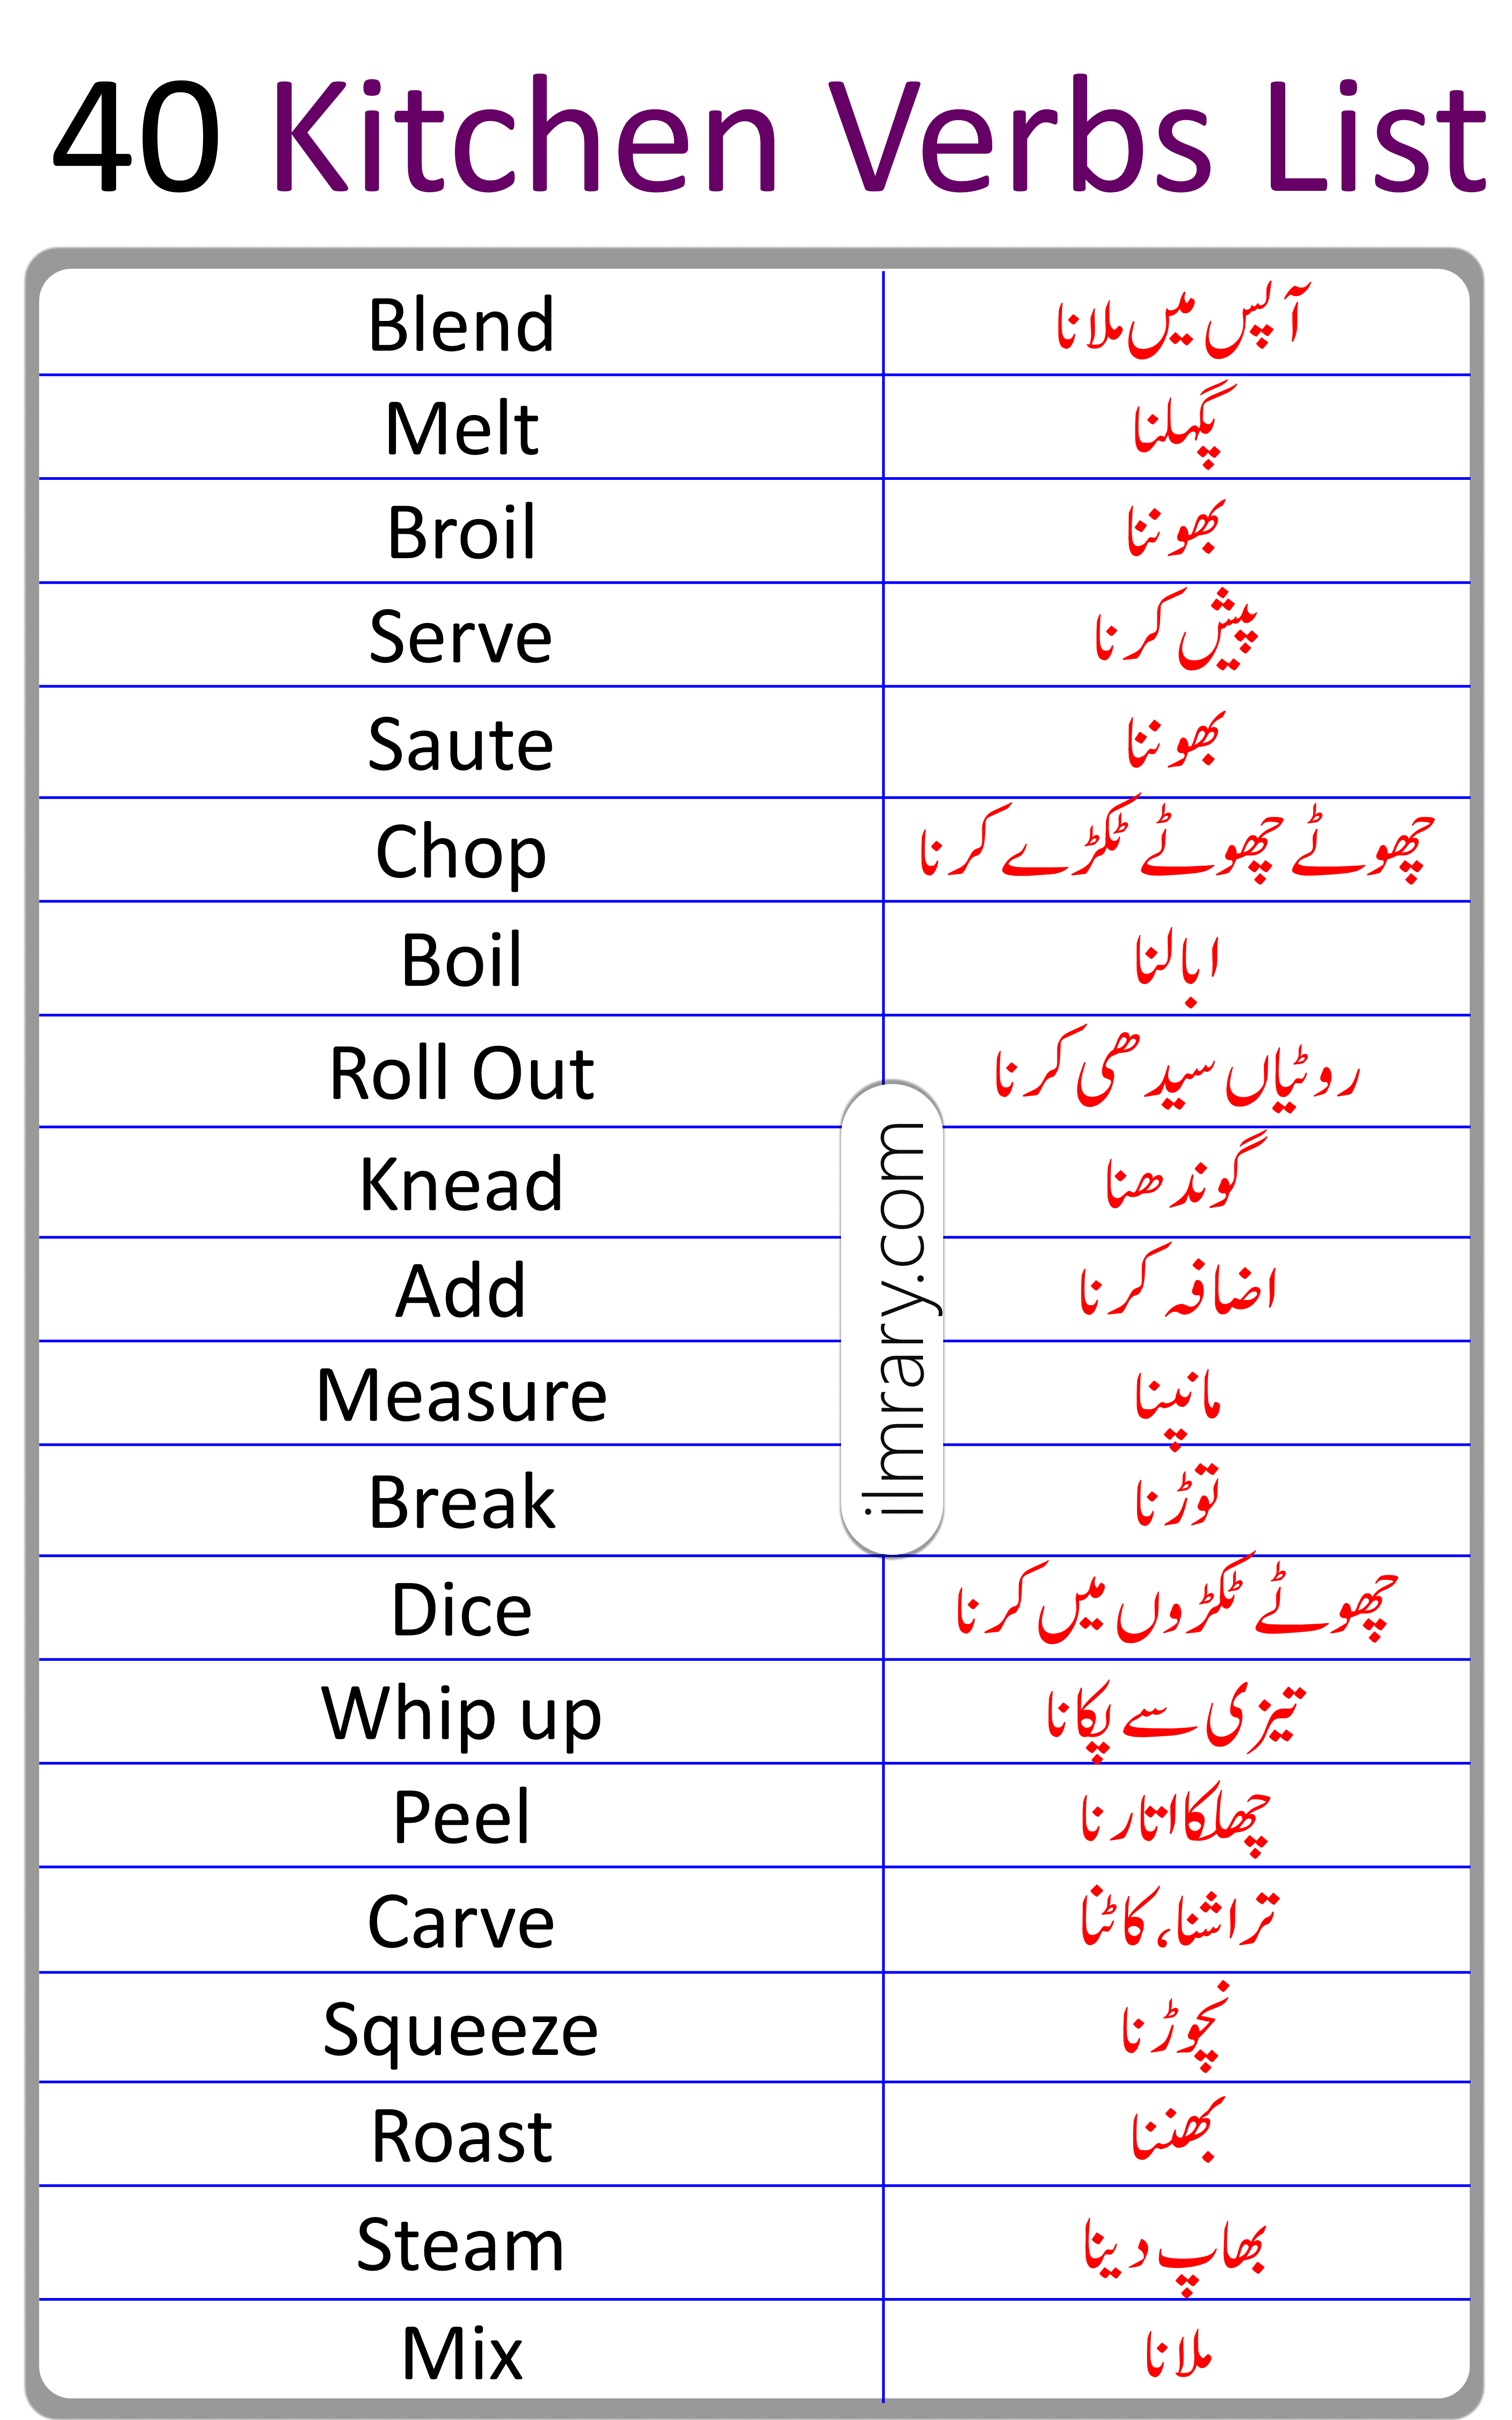 List of Kitchen Verbs in English with Urdu Translation